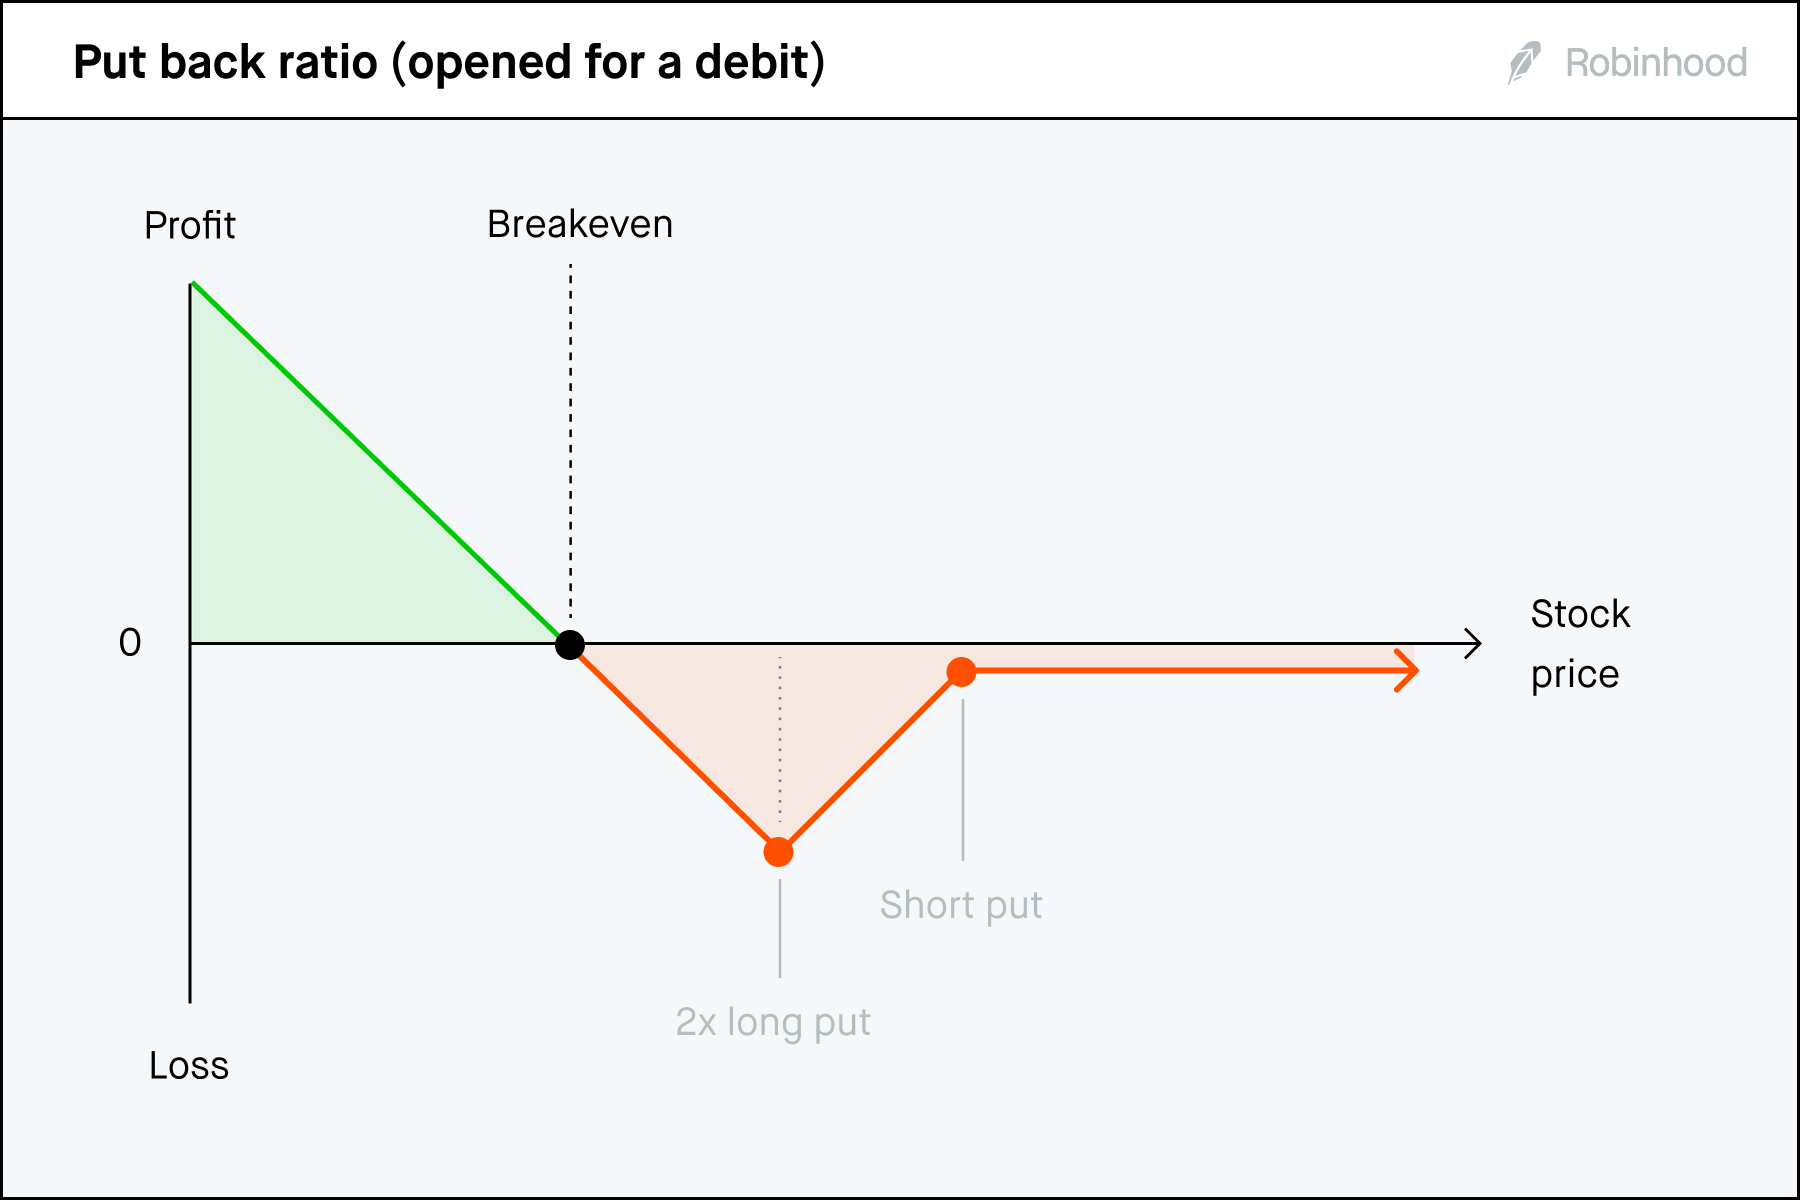 Put back ratio debit P/L chart 3x